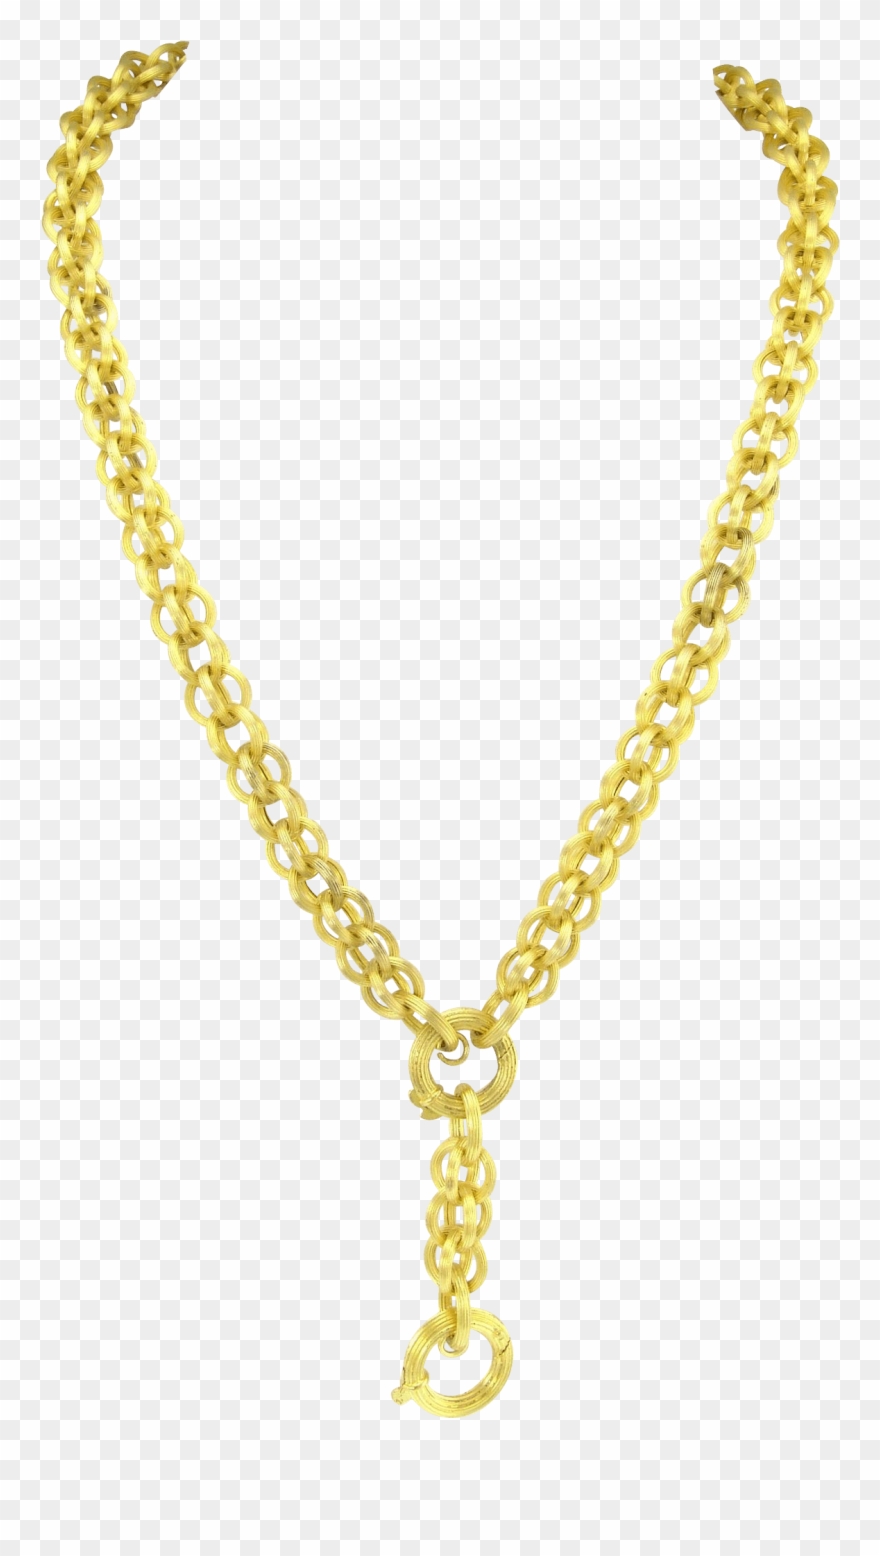 Gold Chain Clip Art.